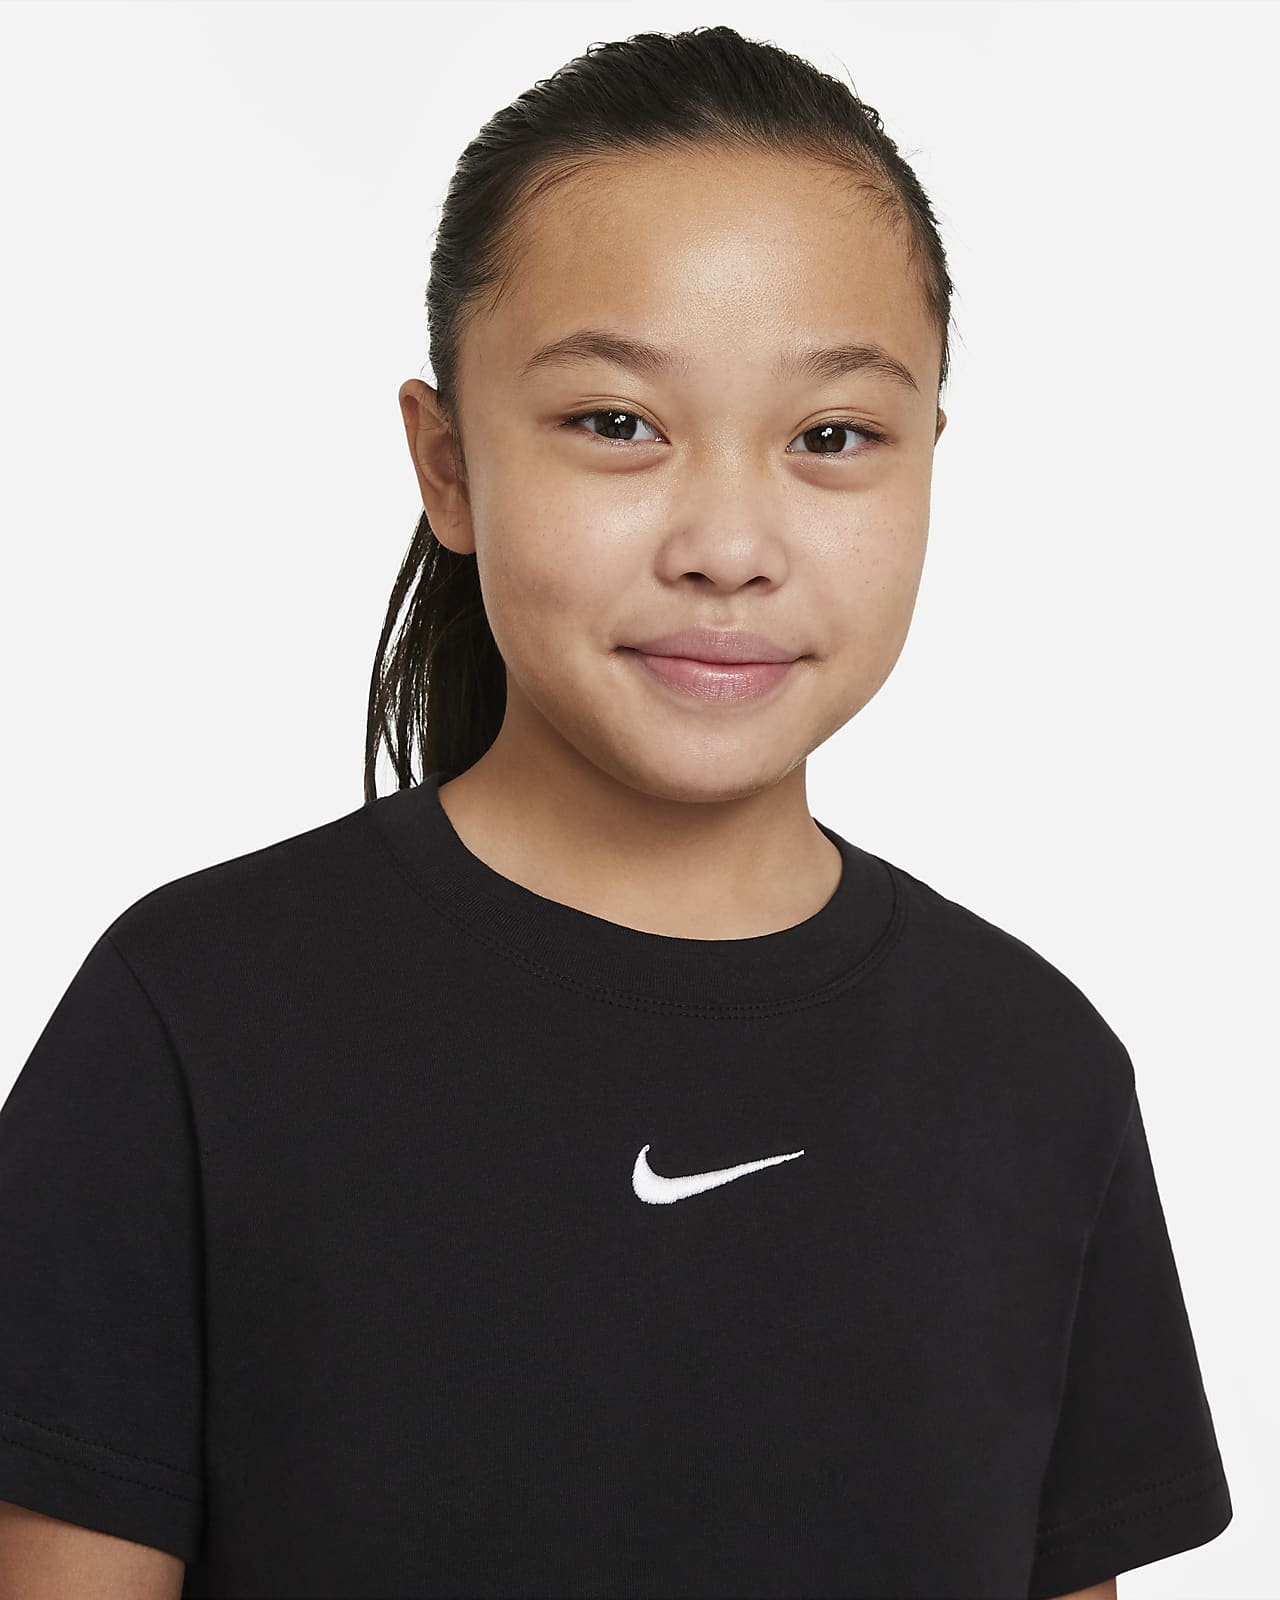 voldgrav Marty Fielding Kejserlig Nike Sportswear-T-shirt til store børn (piger). Nike DK